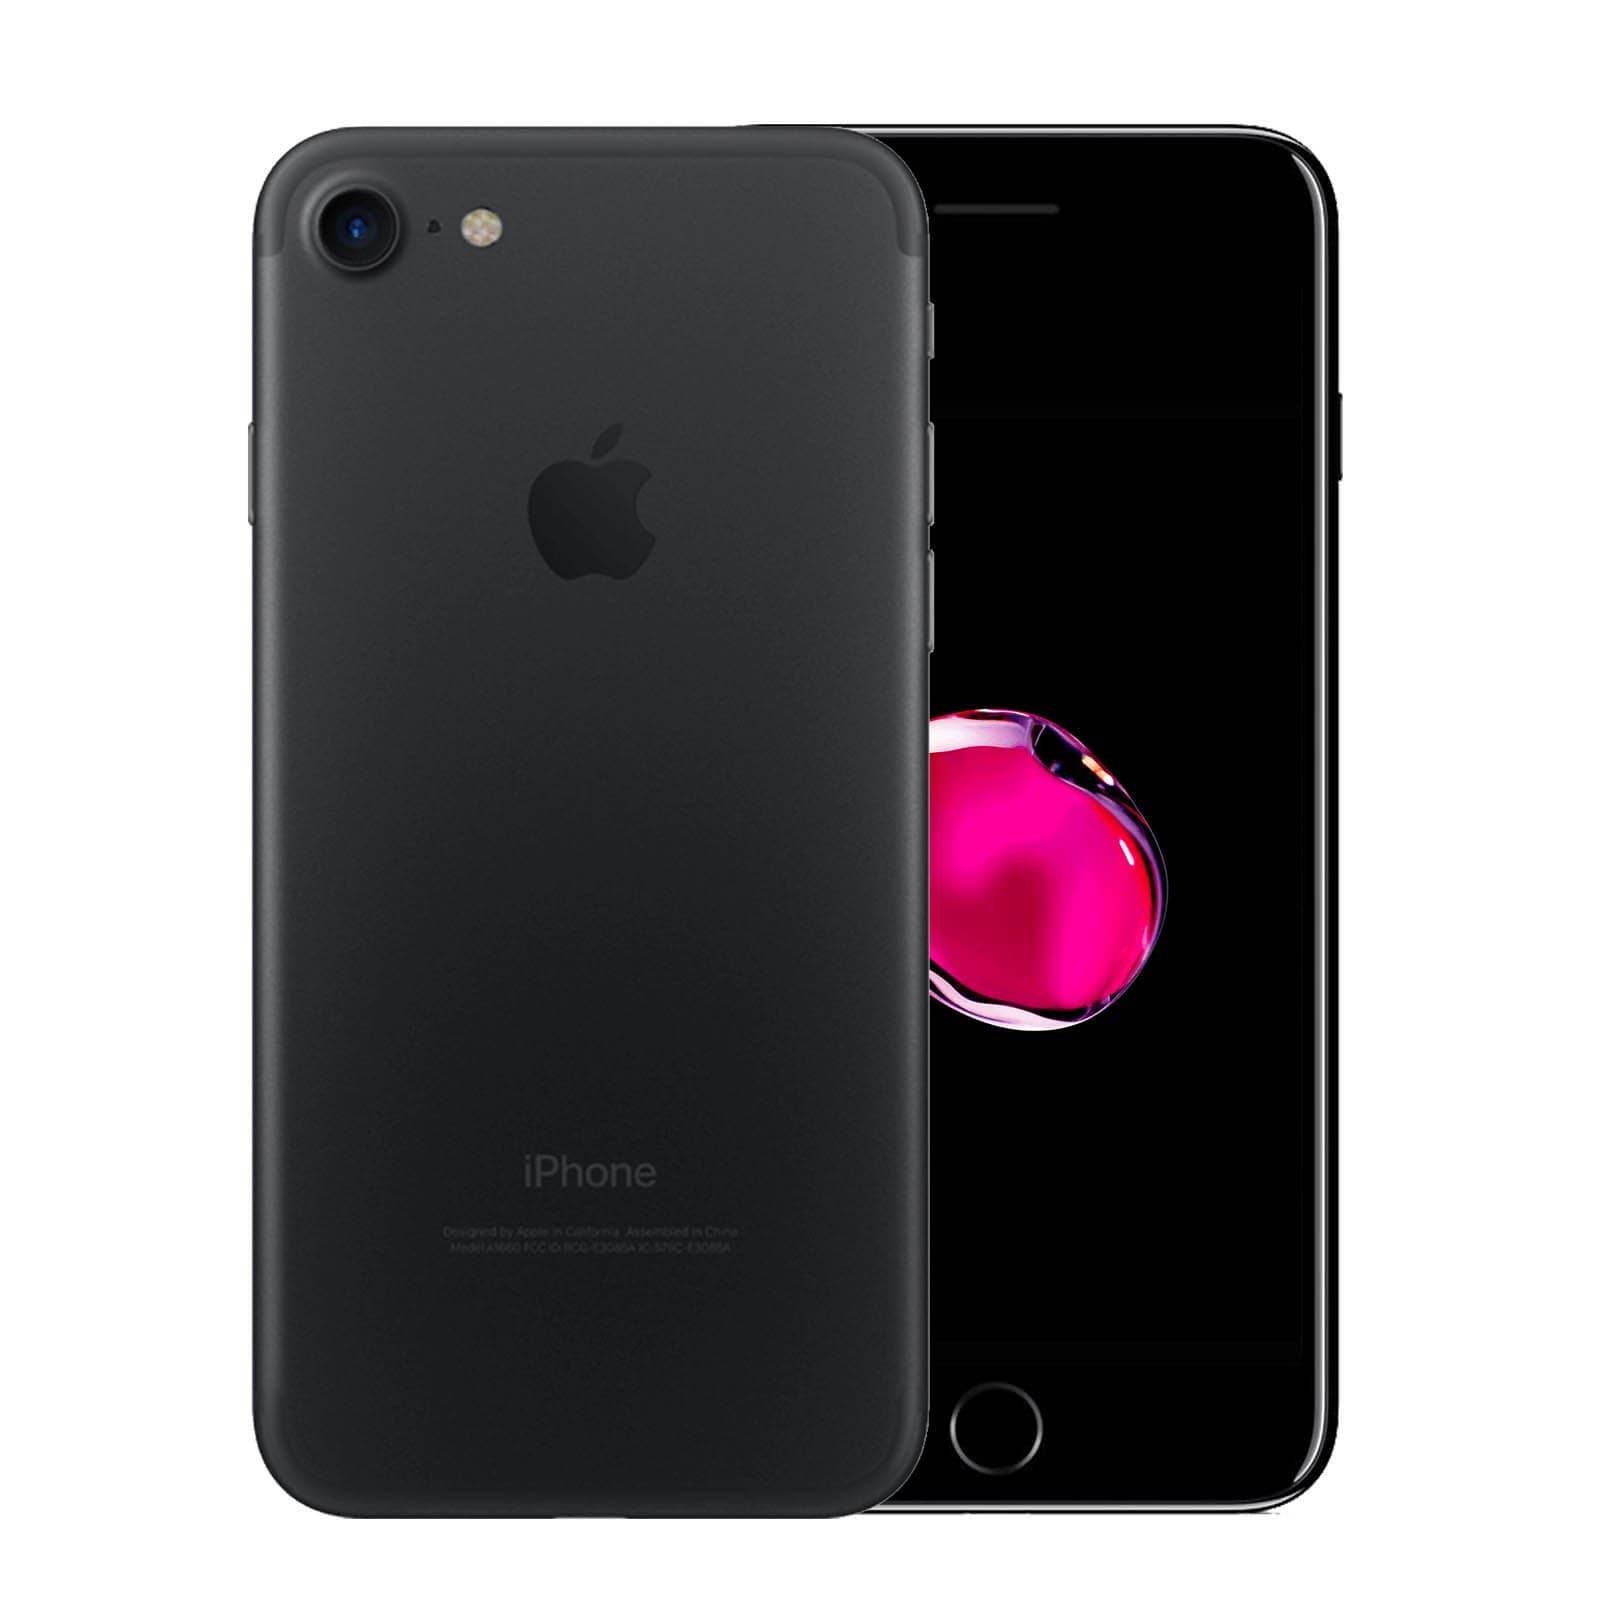 Apple iPhone 7 32GB Black Fair - Unlocked 32GB Black Fair